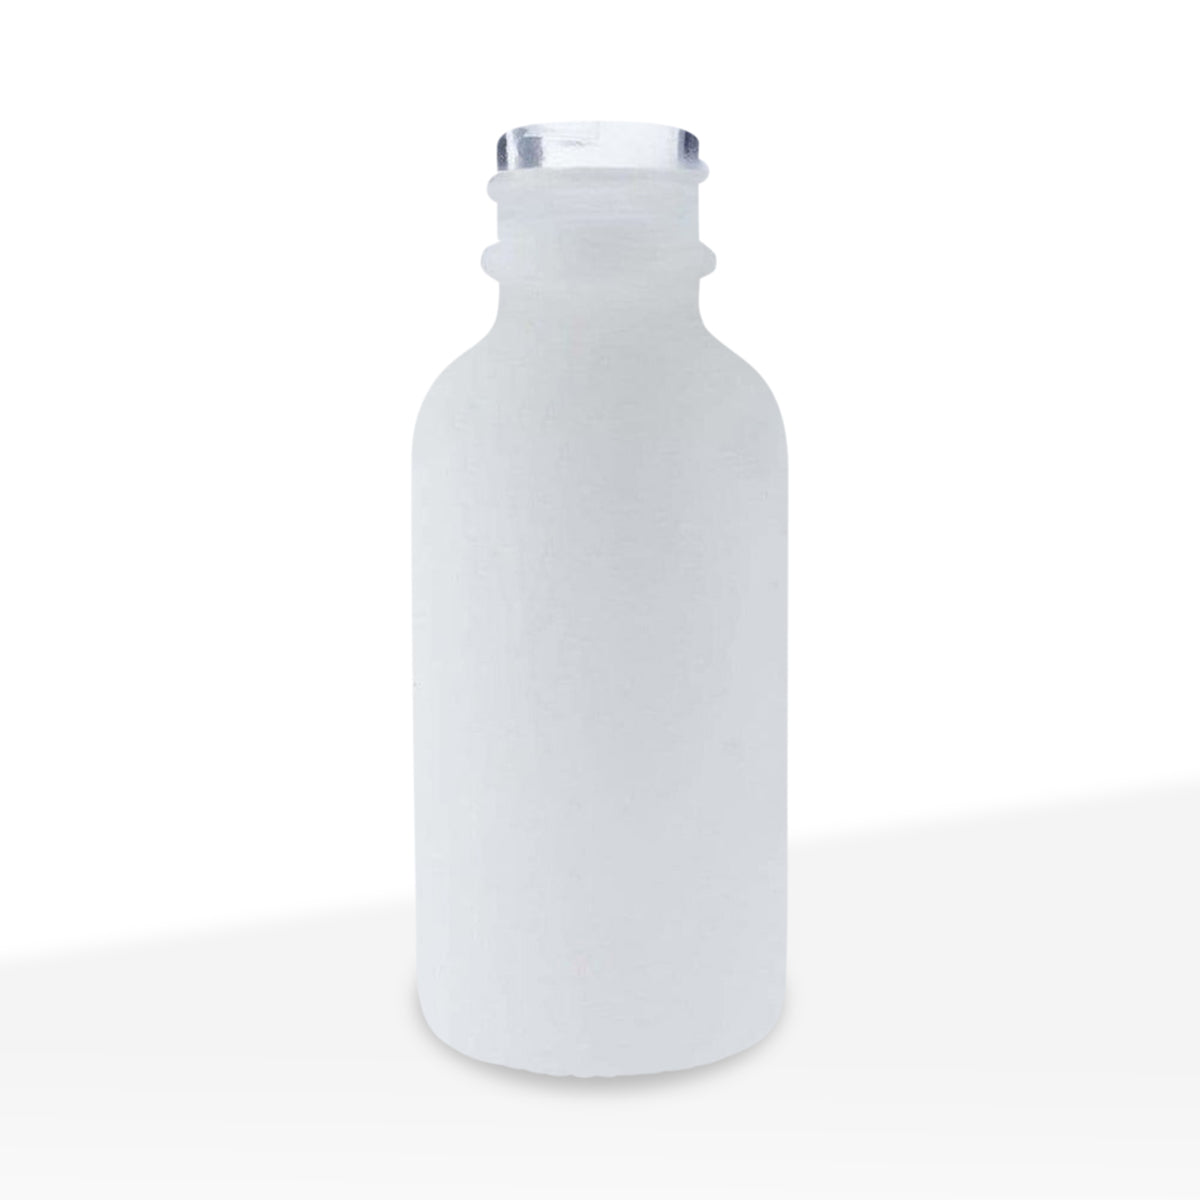 Glass Bottle | Boston Round Glass Bottles Matte White | 20mm - 1oz - 180 Count